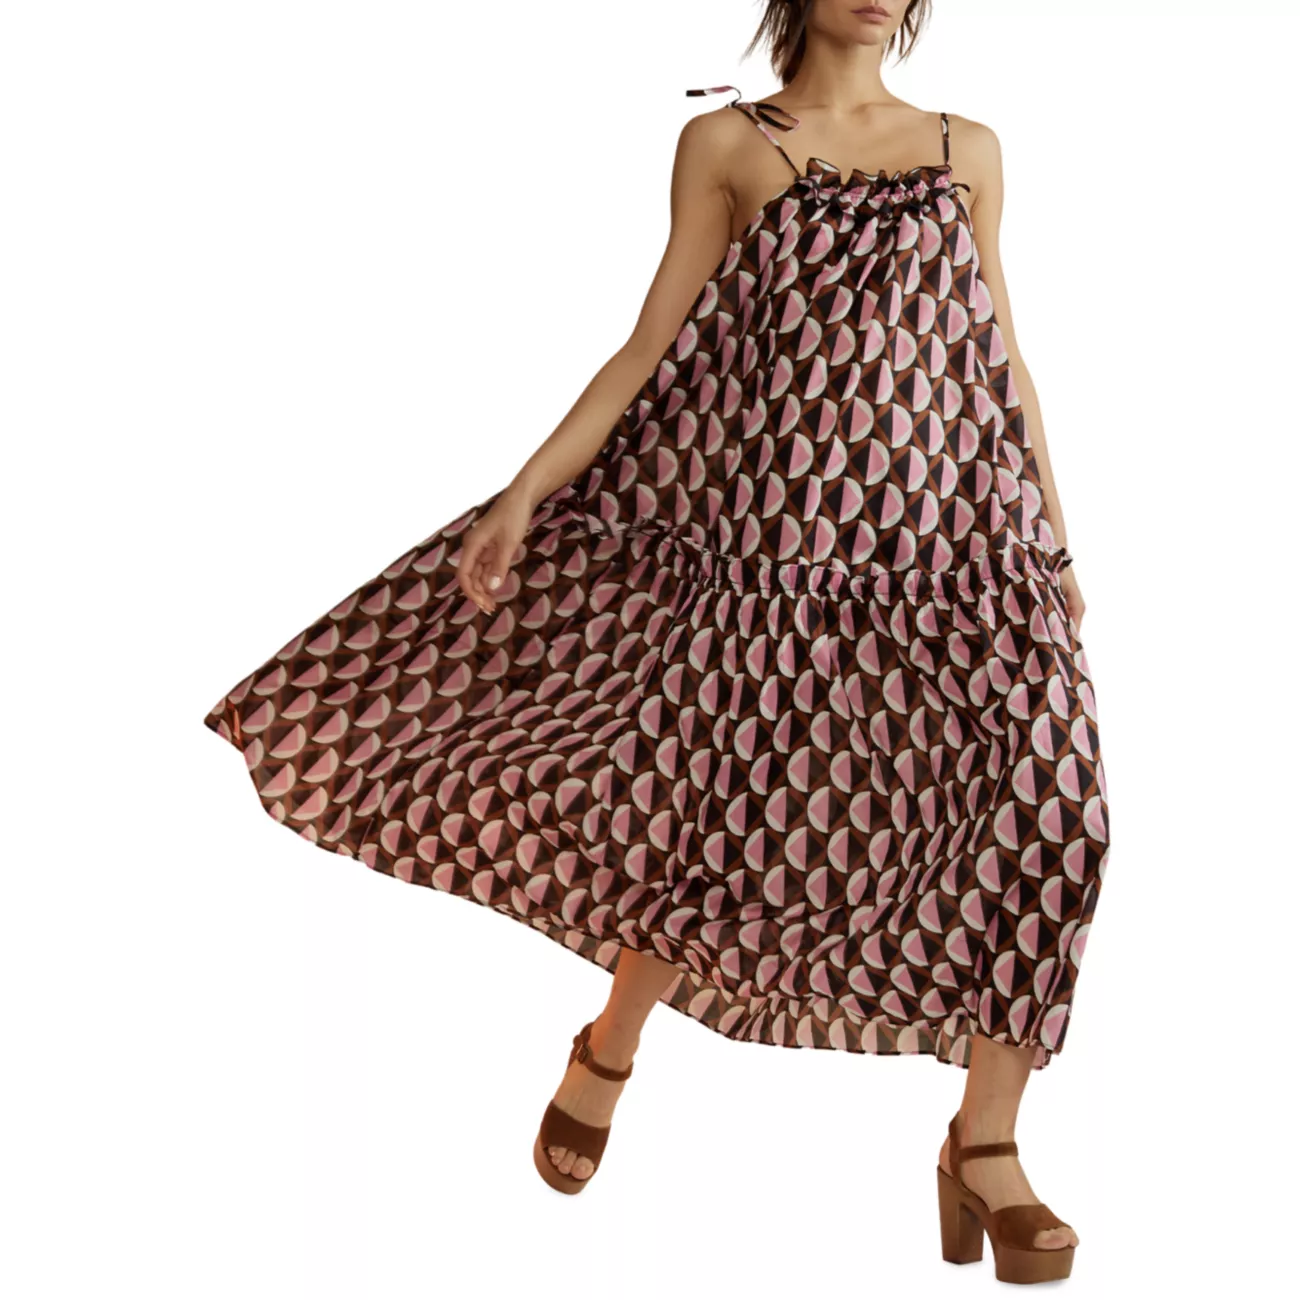 Хлопковое платье макси с геометрическим узором и завязками-спагетти Cynthia Rowley